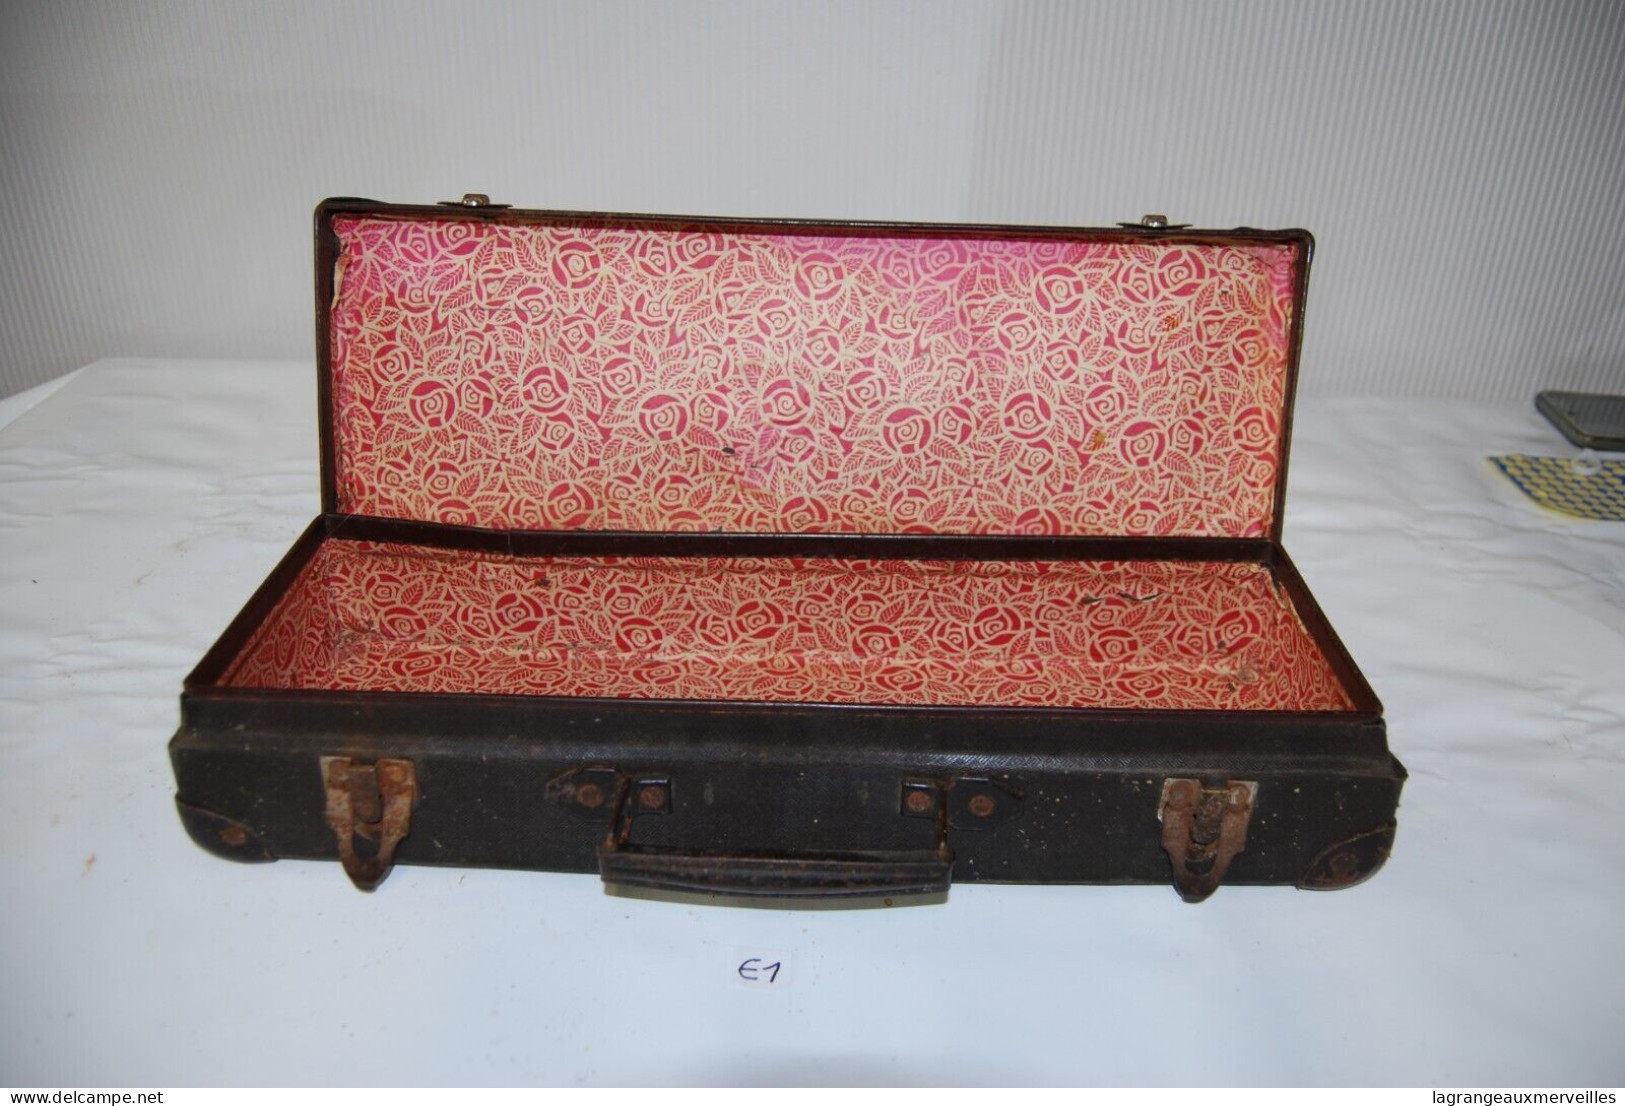 E1 Ancienne valise en carton - vintage